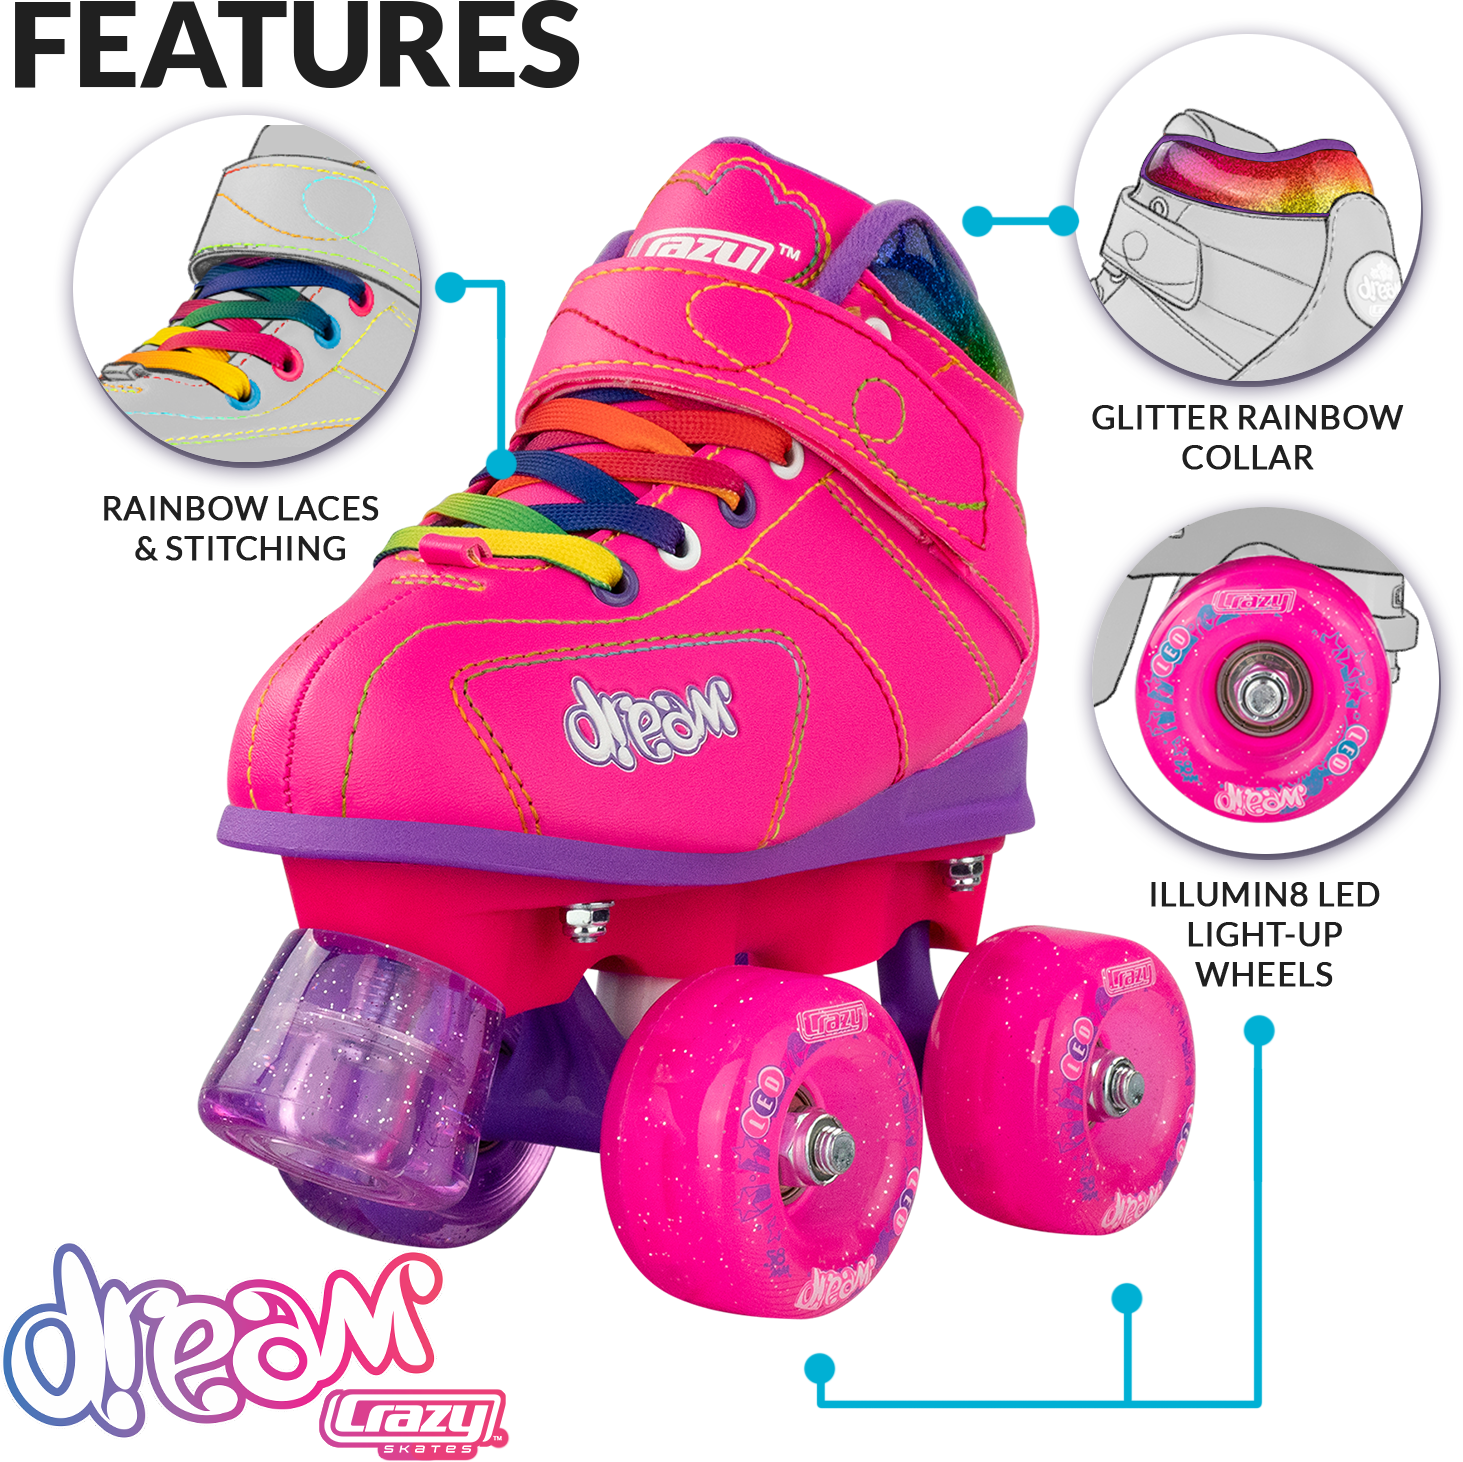 Available in Pink or Black LED Light-up Wheels Crazy Skates Dream Roller Skates for Girls and Boys